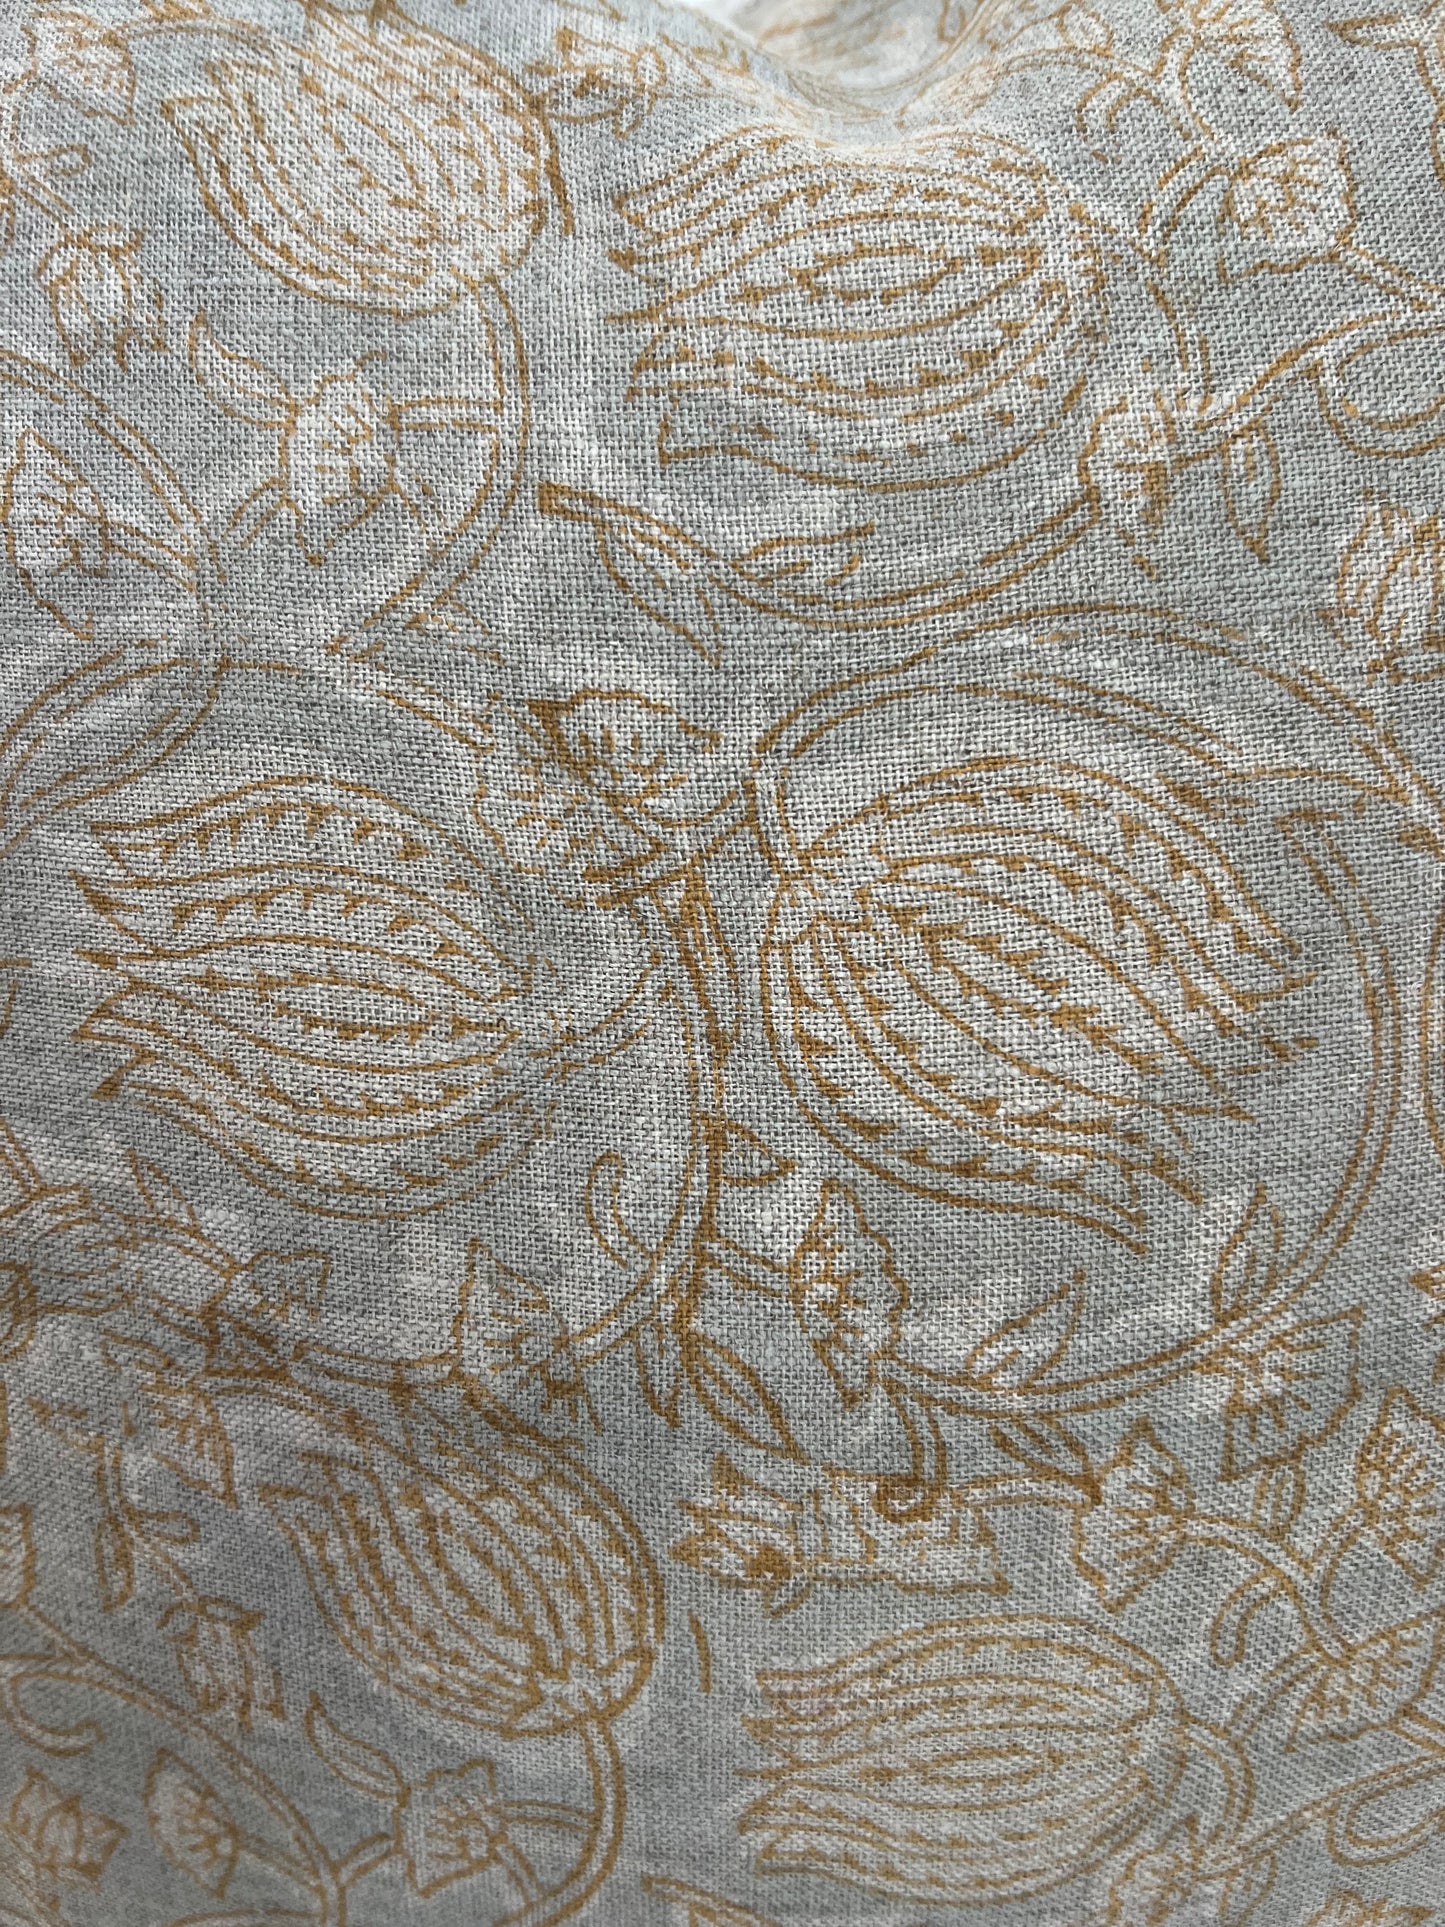 Lotus Pillow Cover